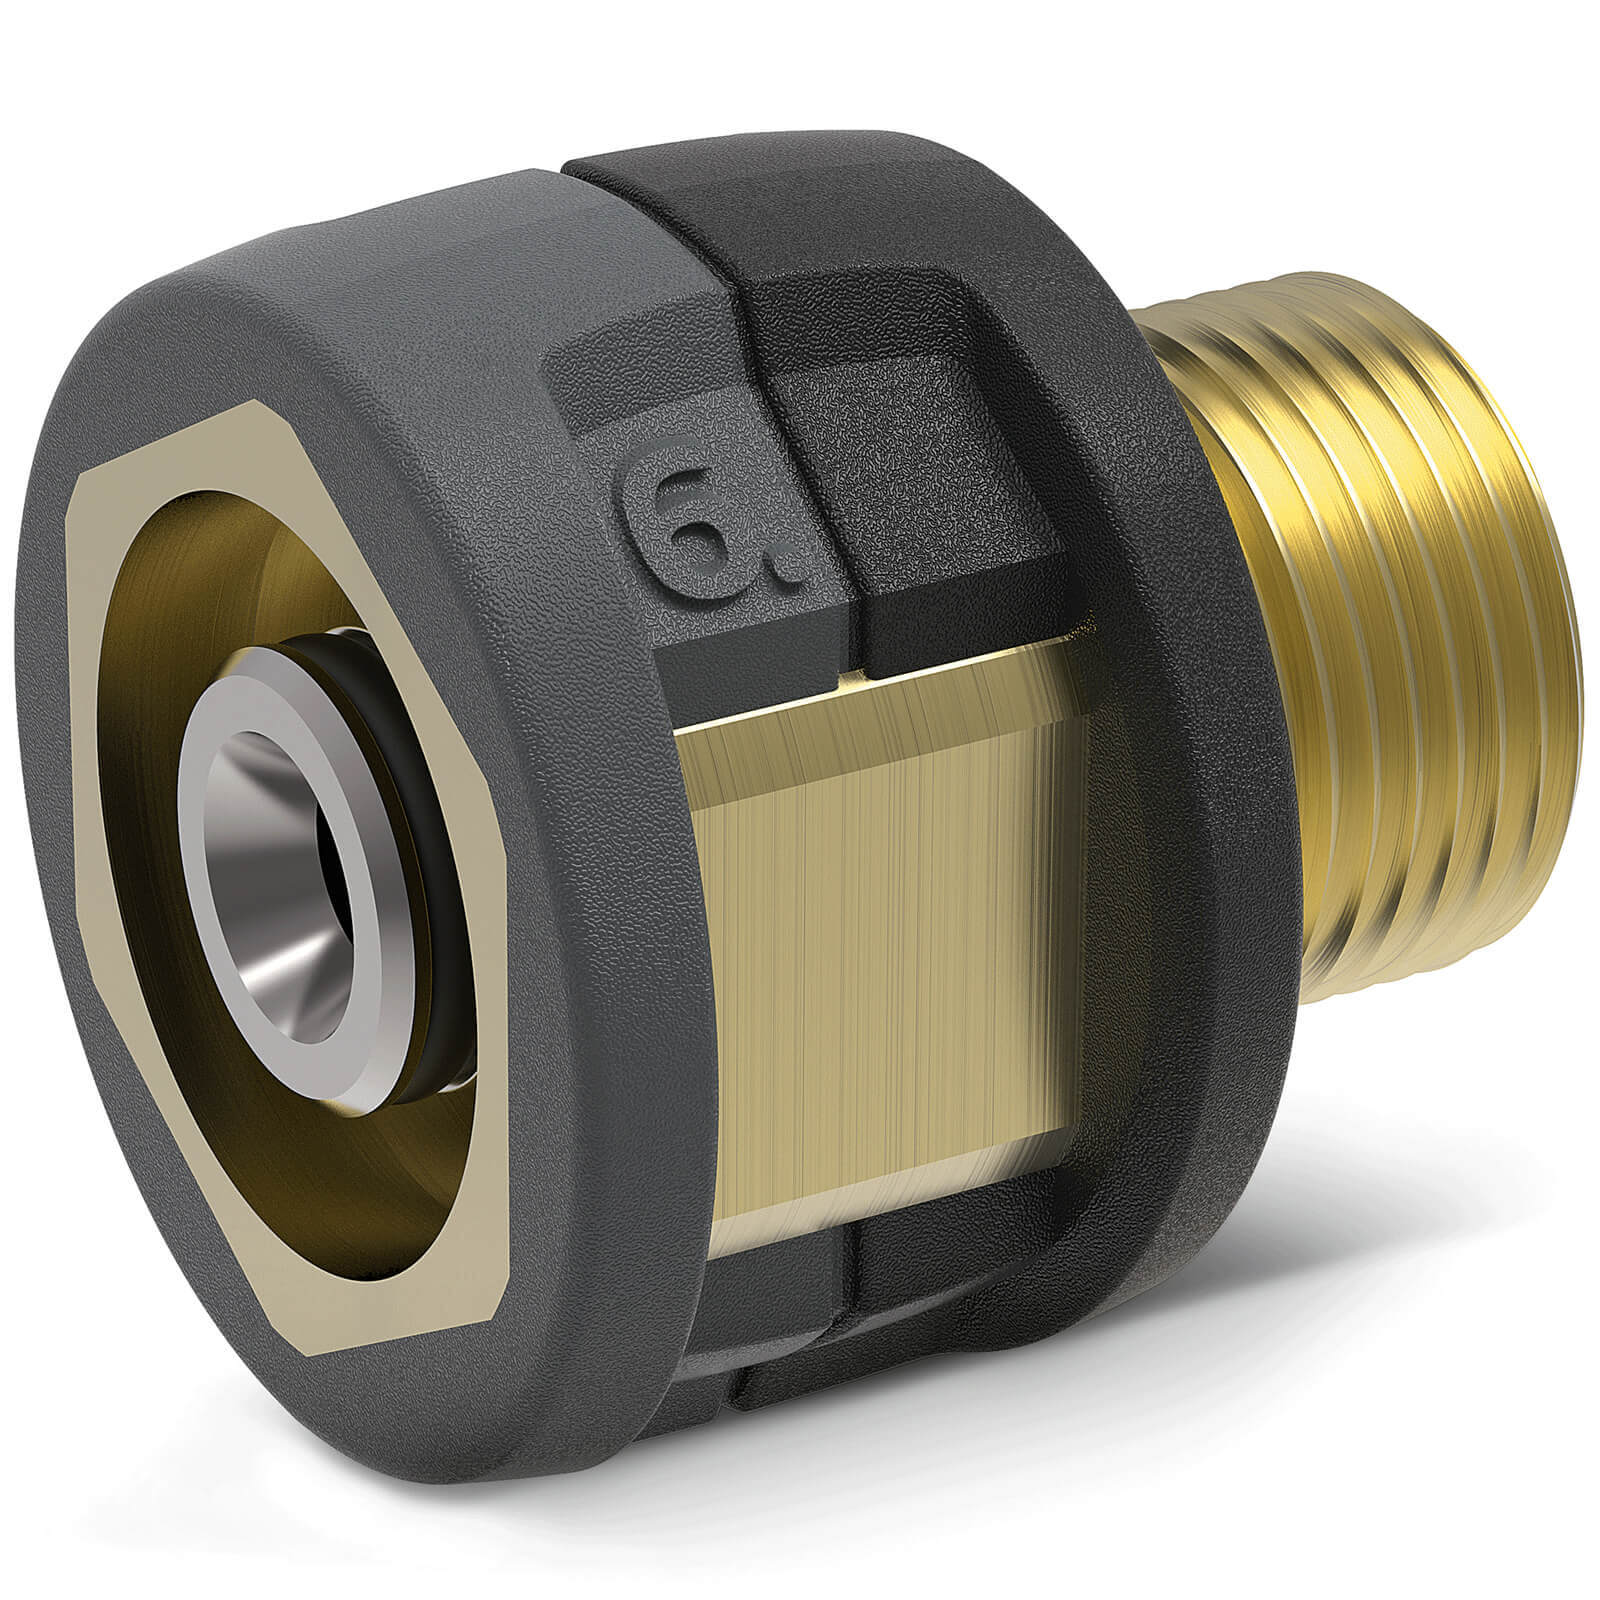 Image of Karcher Adapter 6 TR22IG-M22AG Easy!Lock Pressure Washer to Old High Pressure Hose